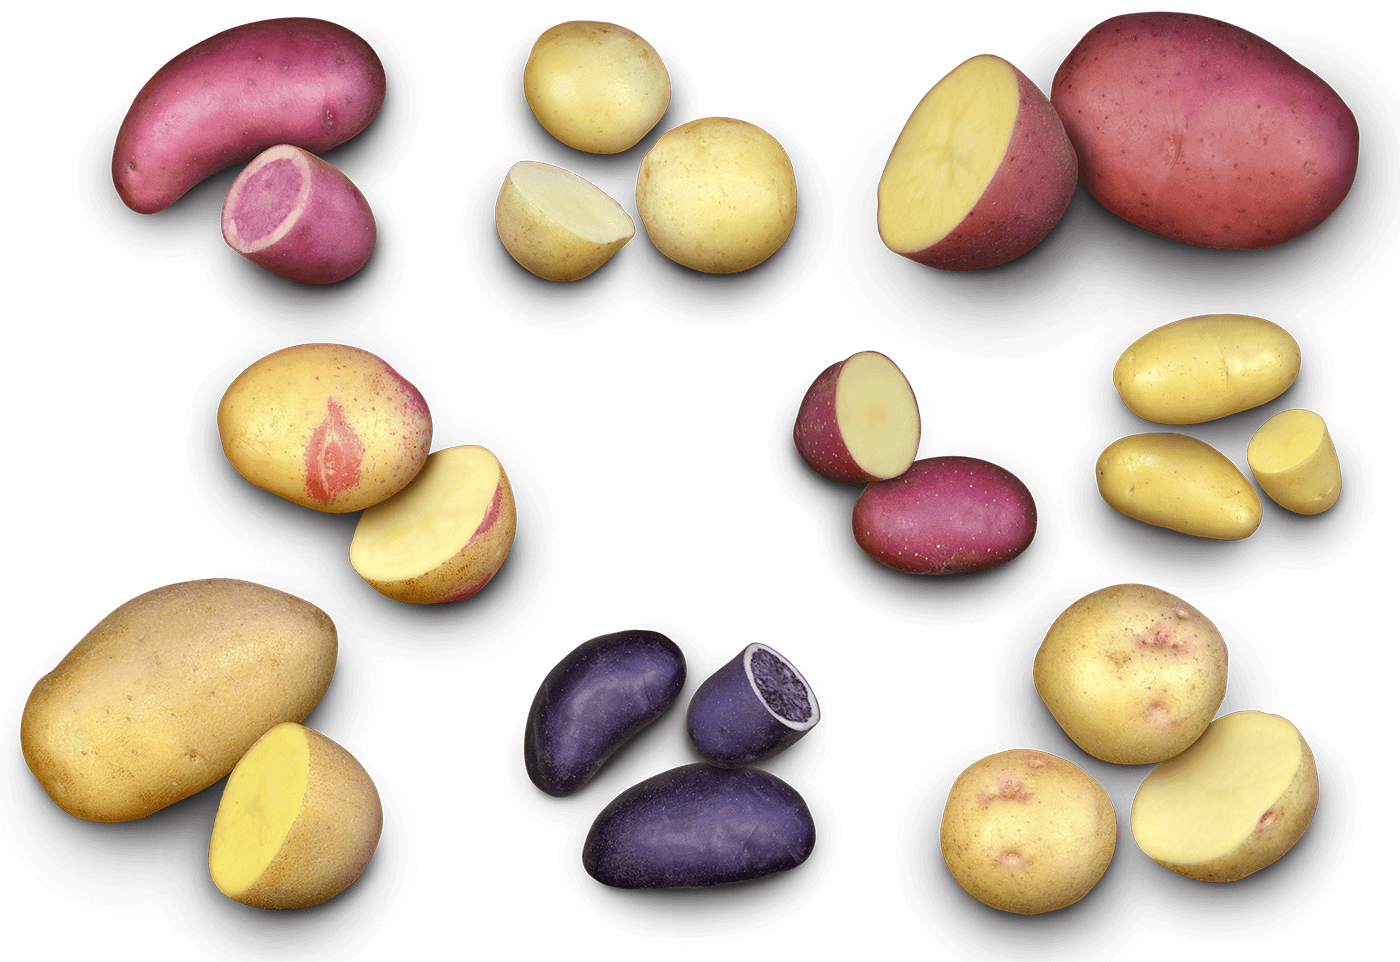 Potato collage